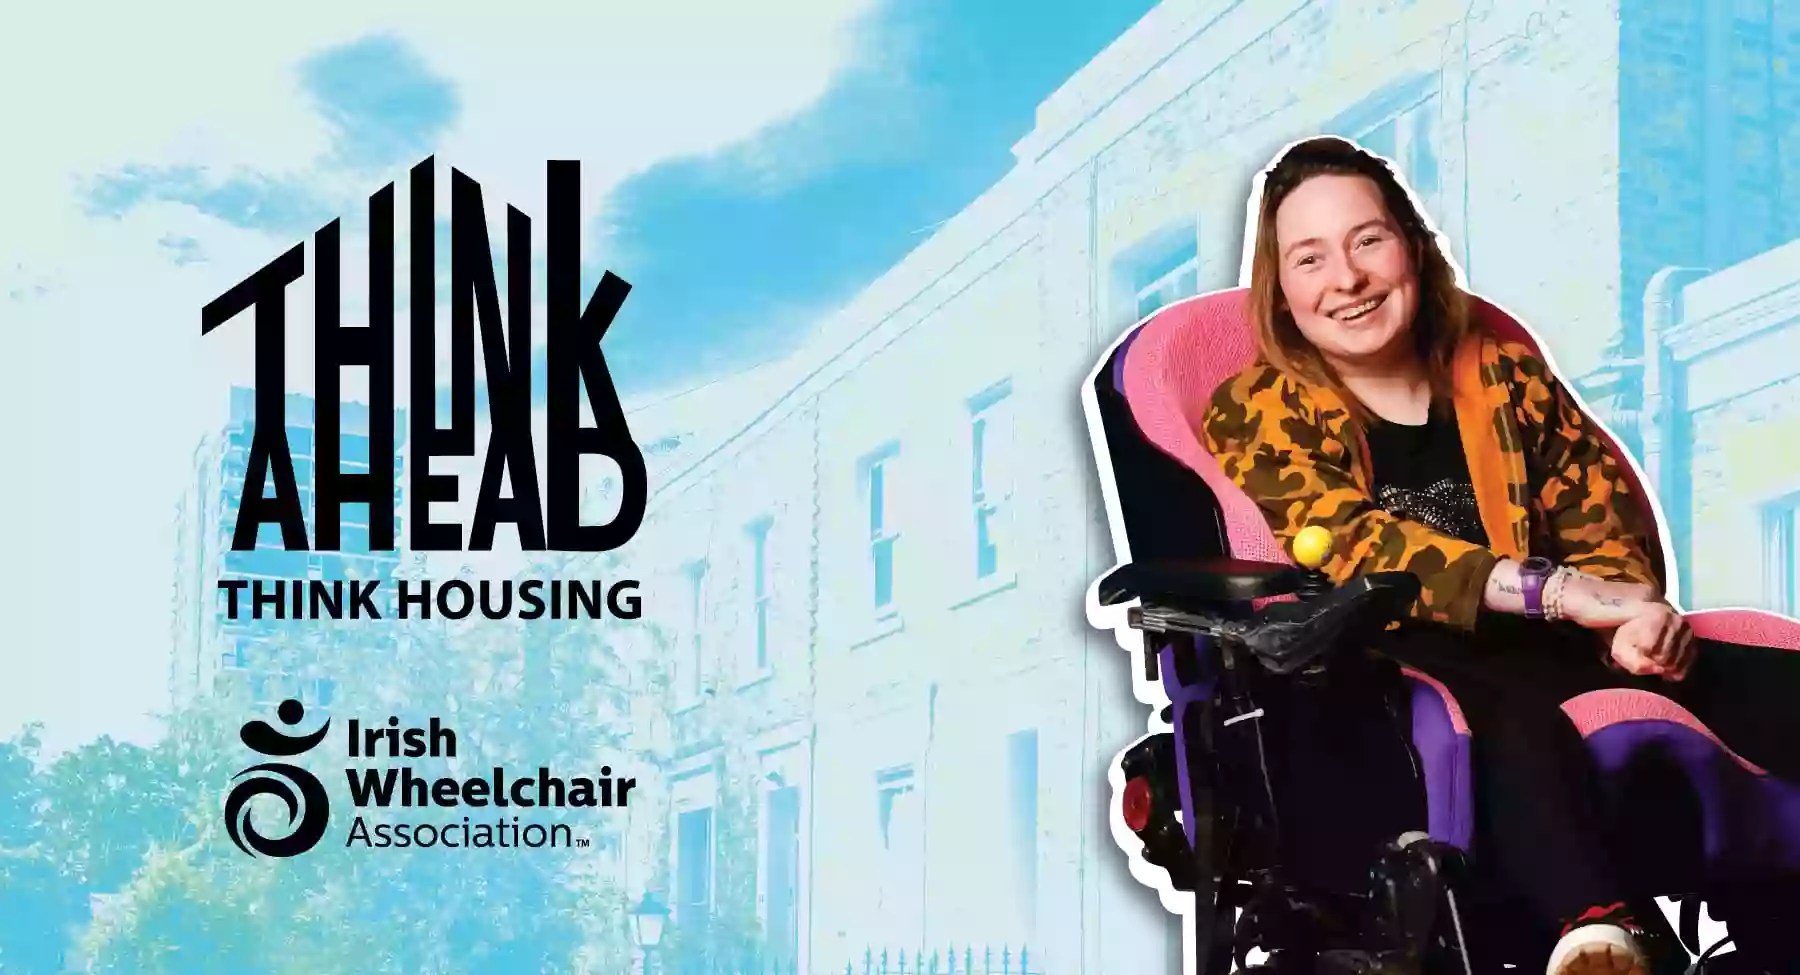 Irish Wheelchair Association